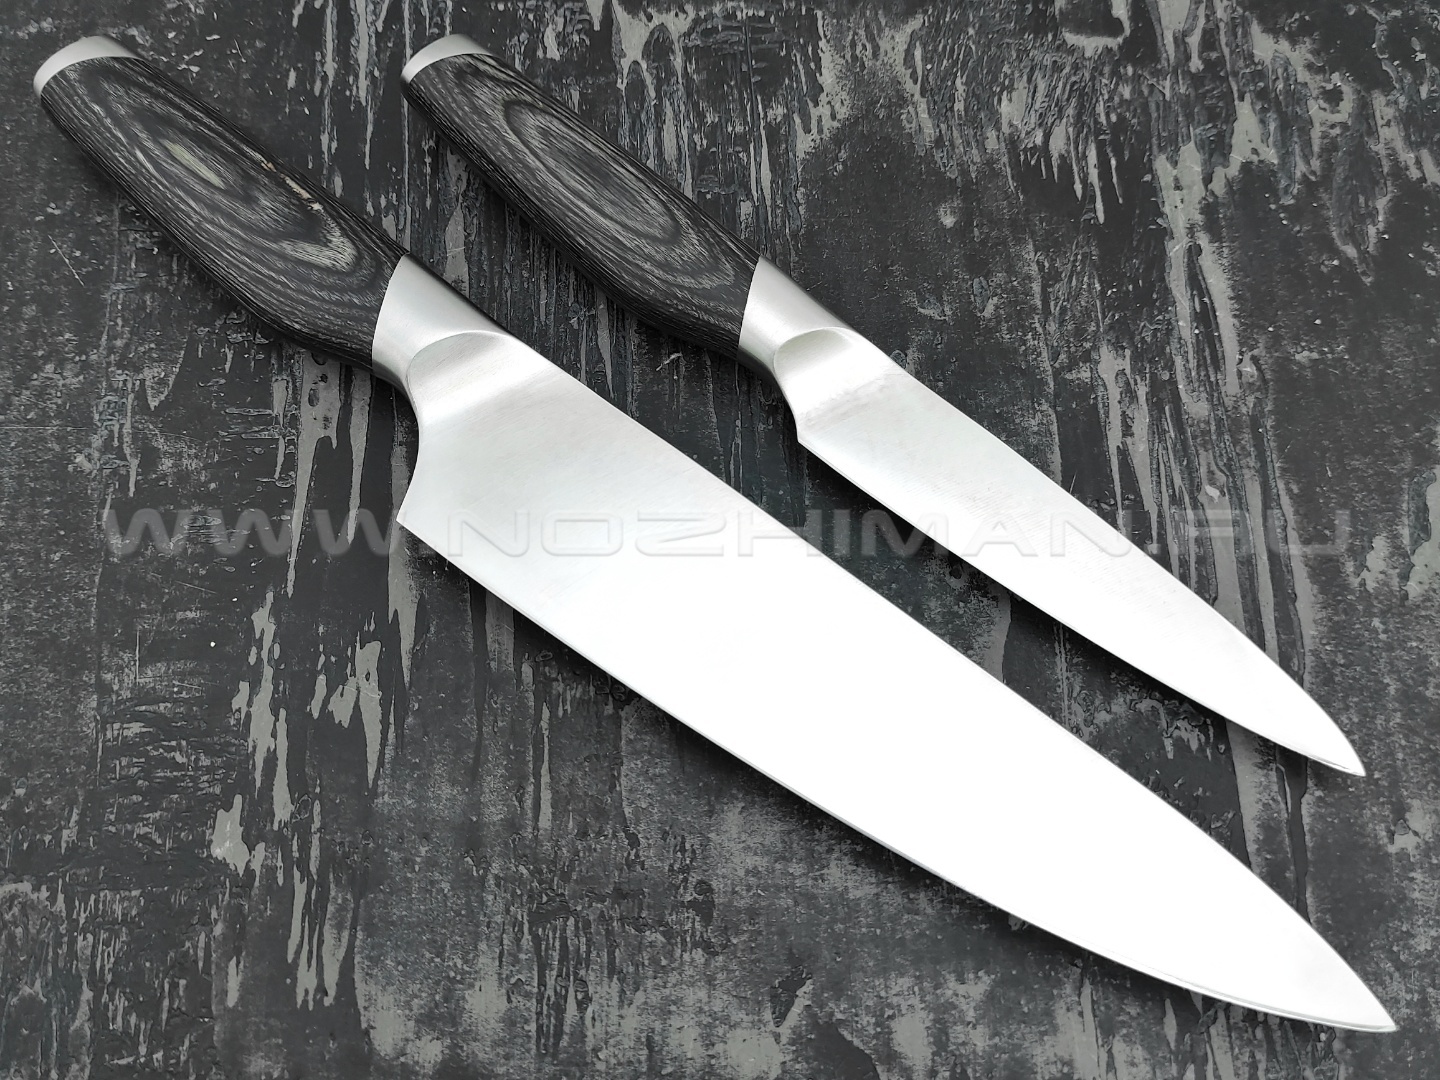 QXF набор из двух кухонных ножей R-51-2 сталь 50Cr15MoV, рукоять дерево